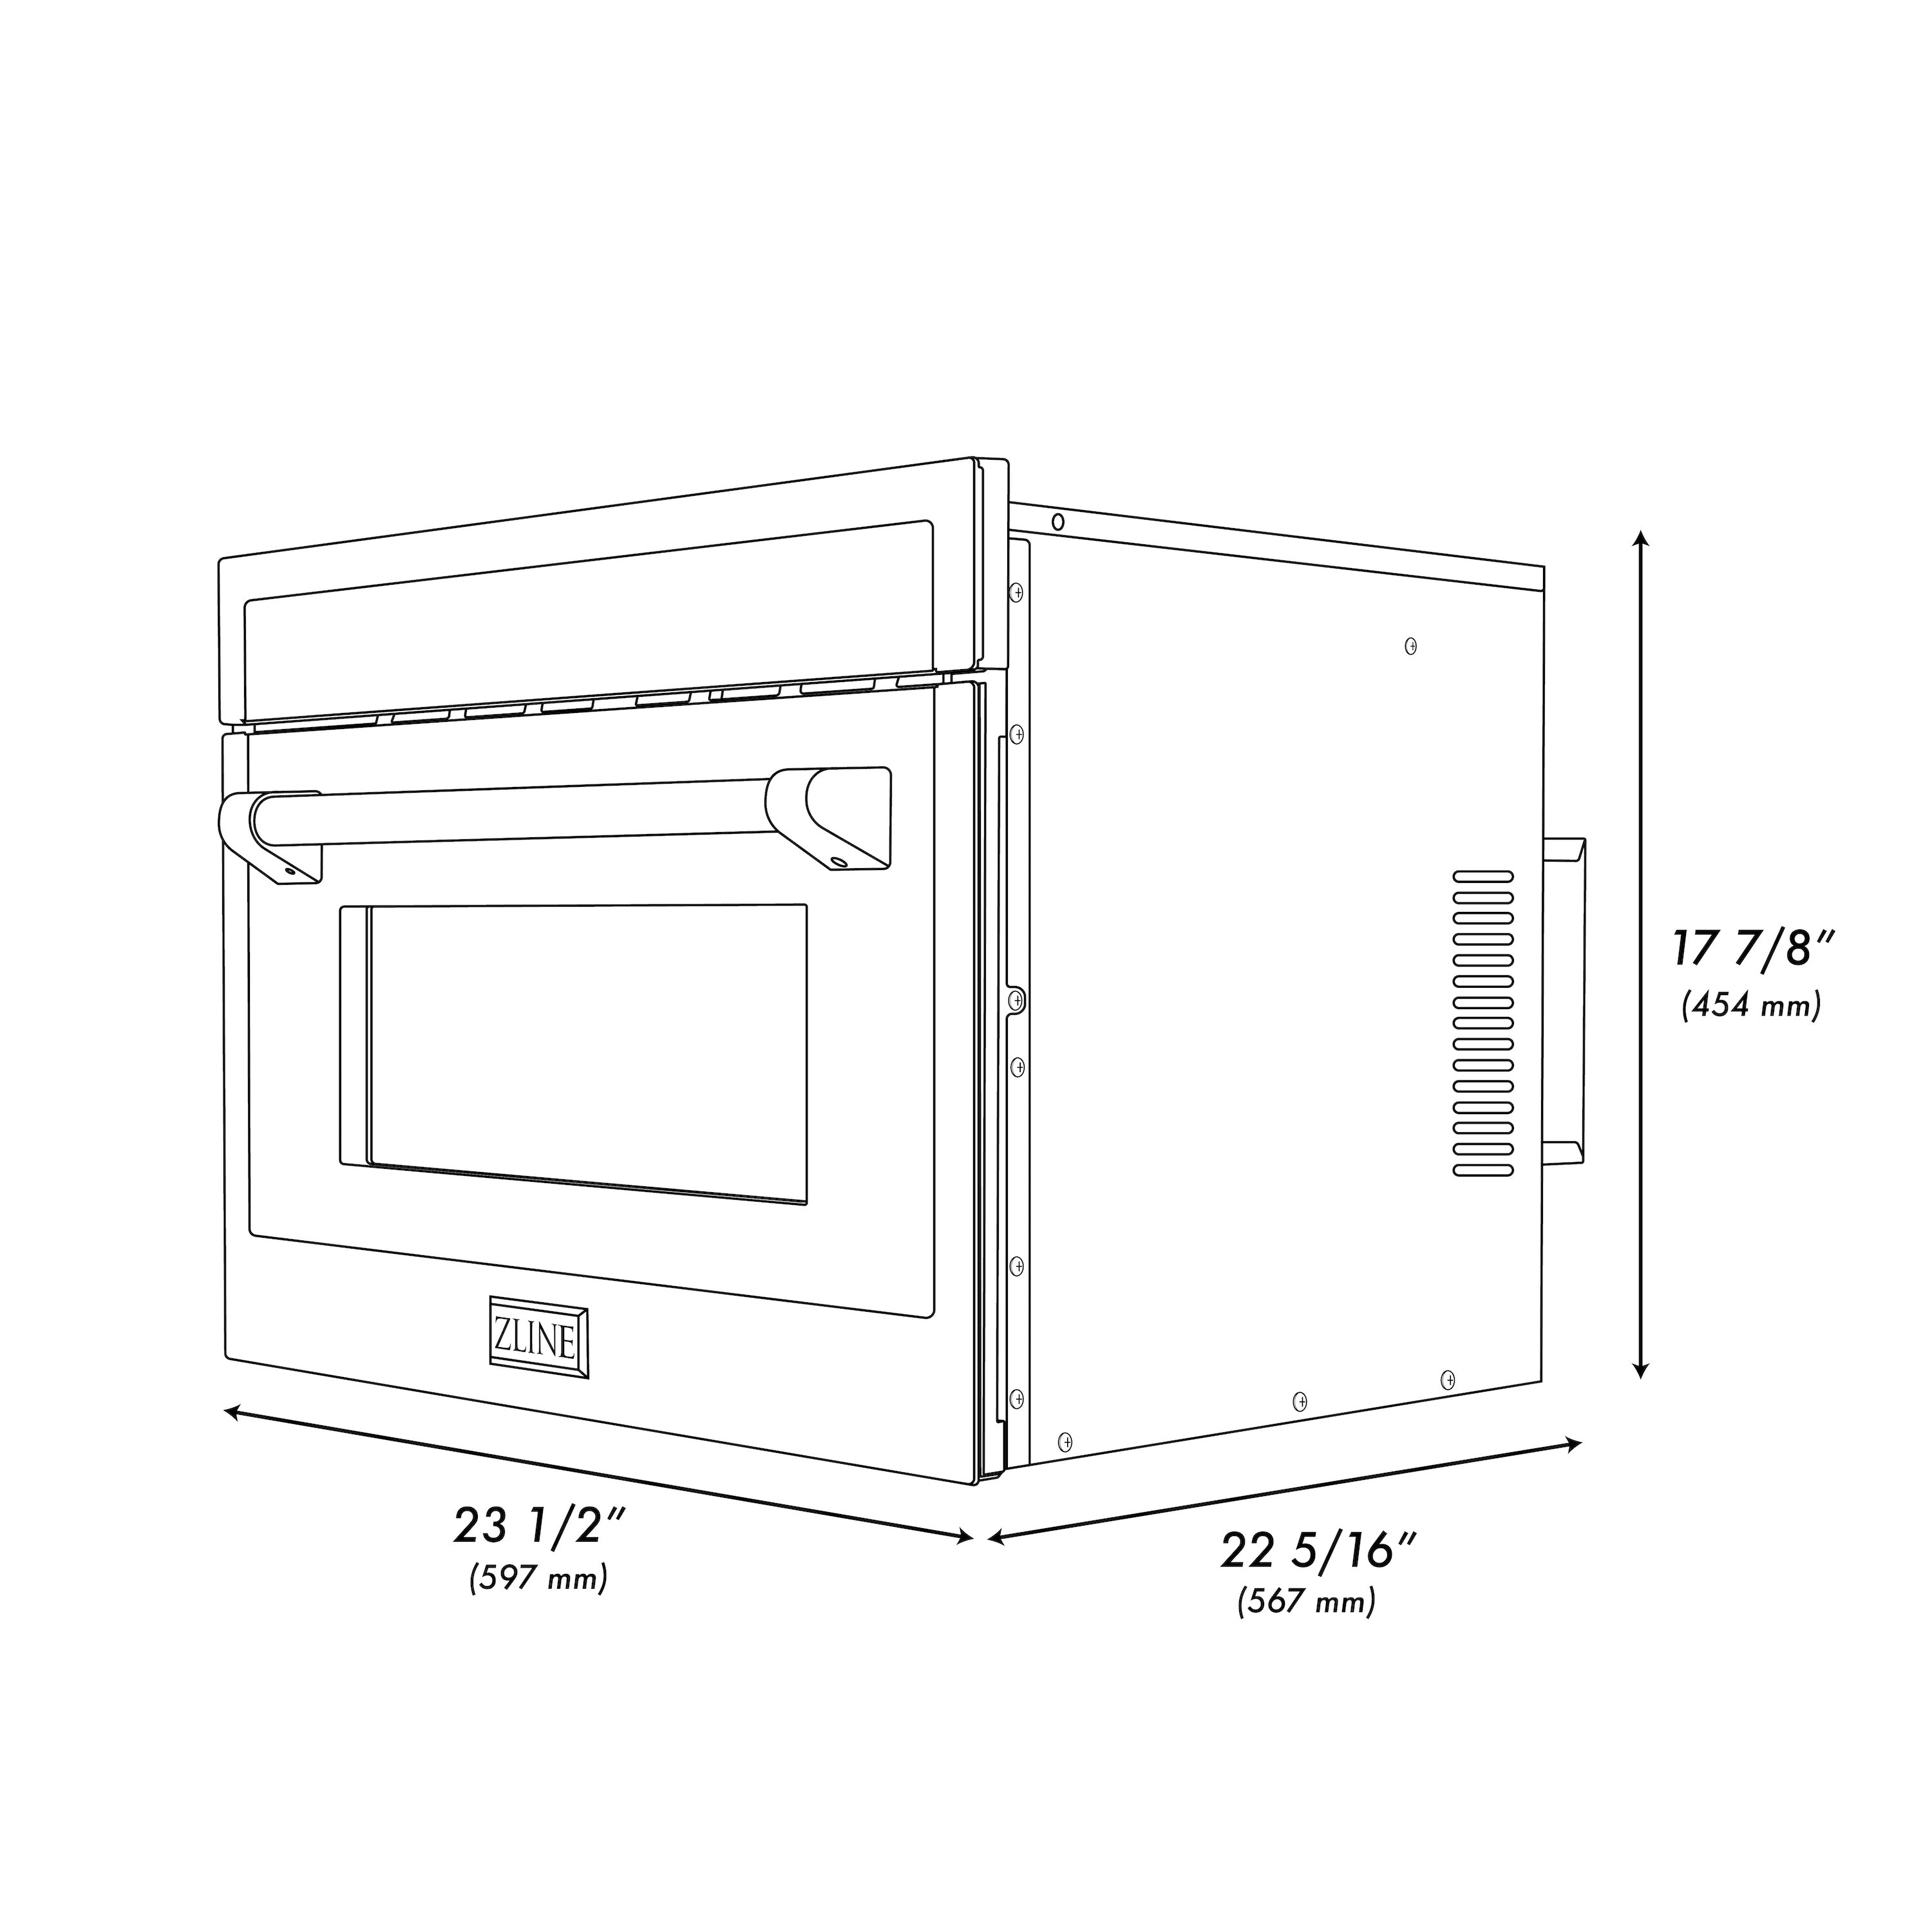 ZLINE 24" Microwave Oven dimensional diagram.